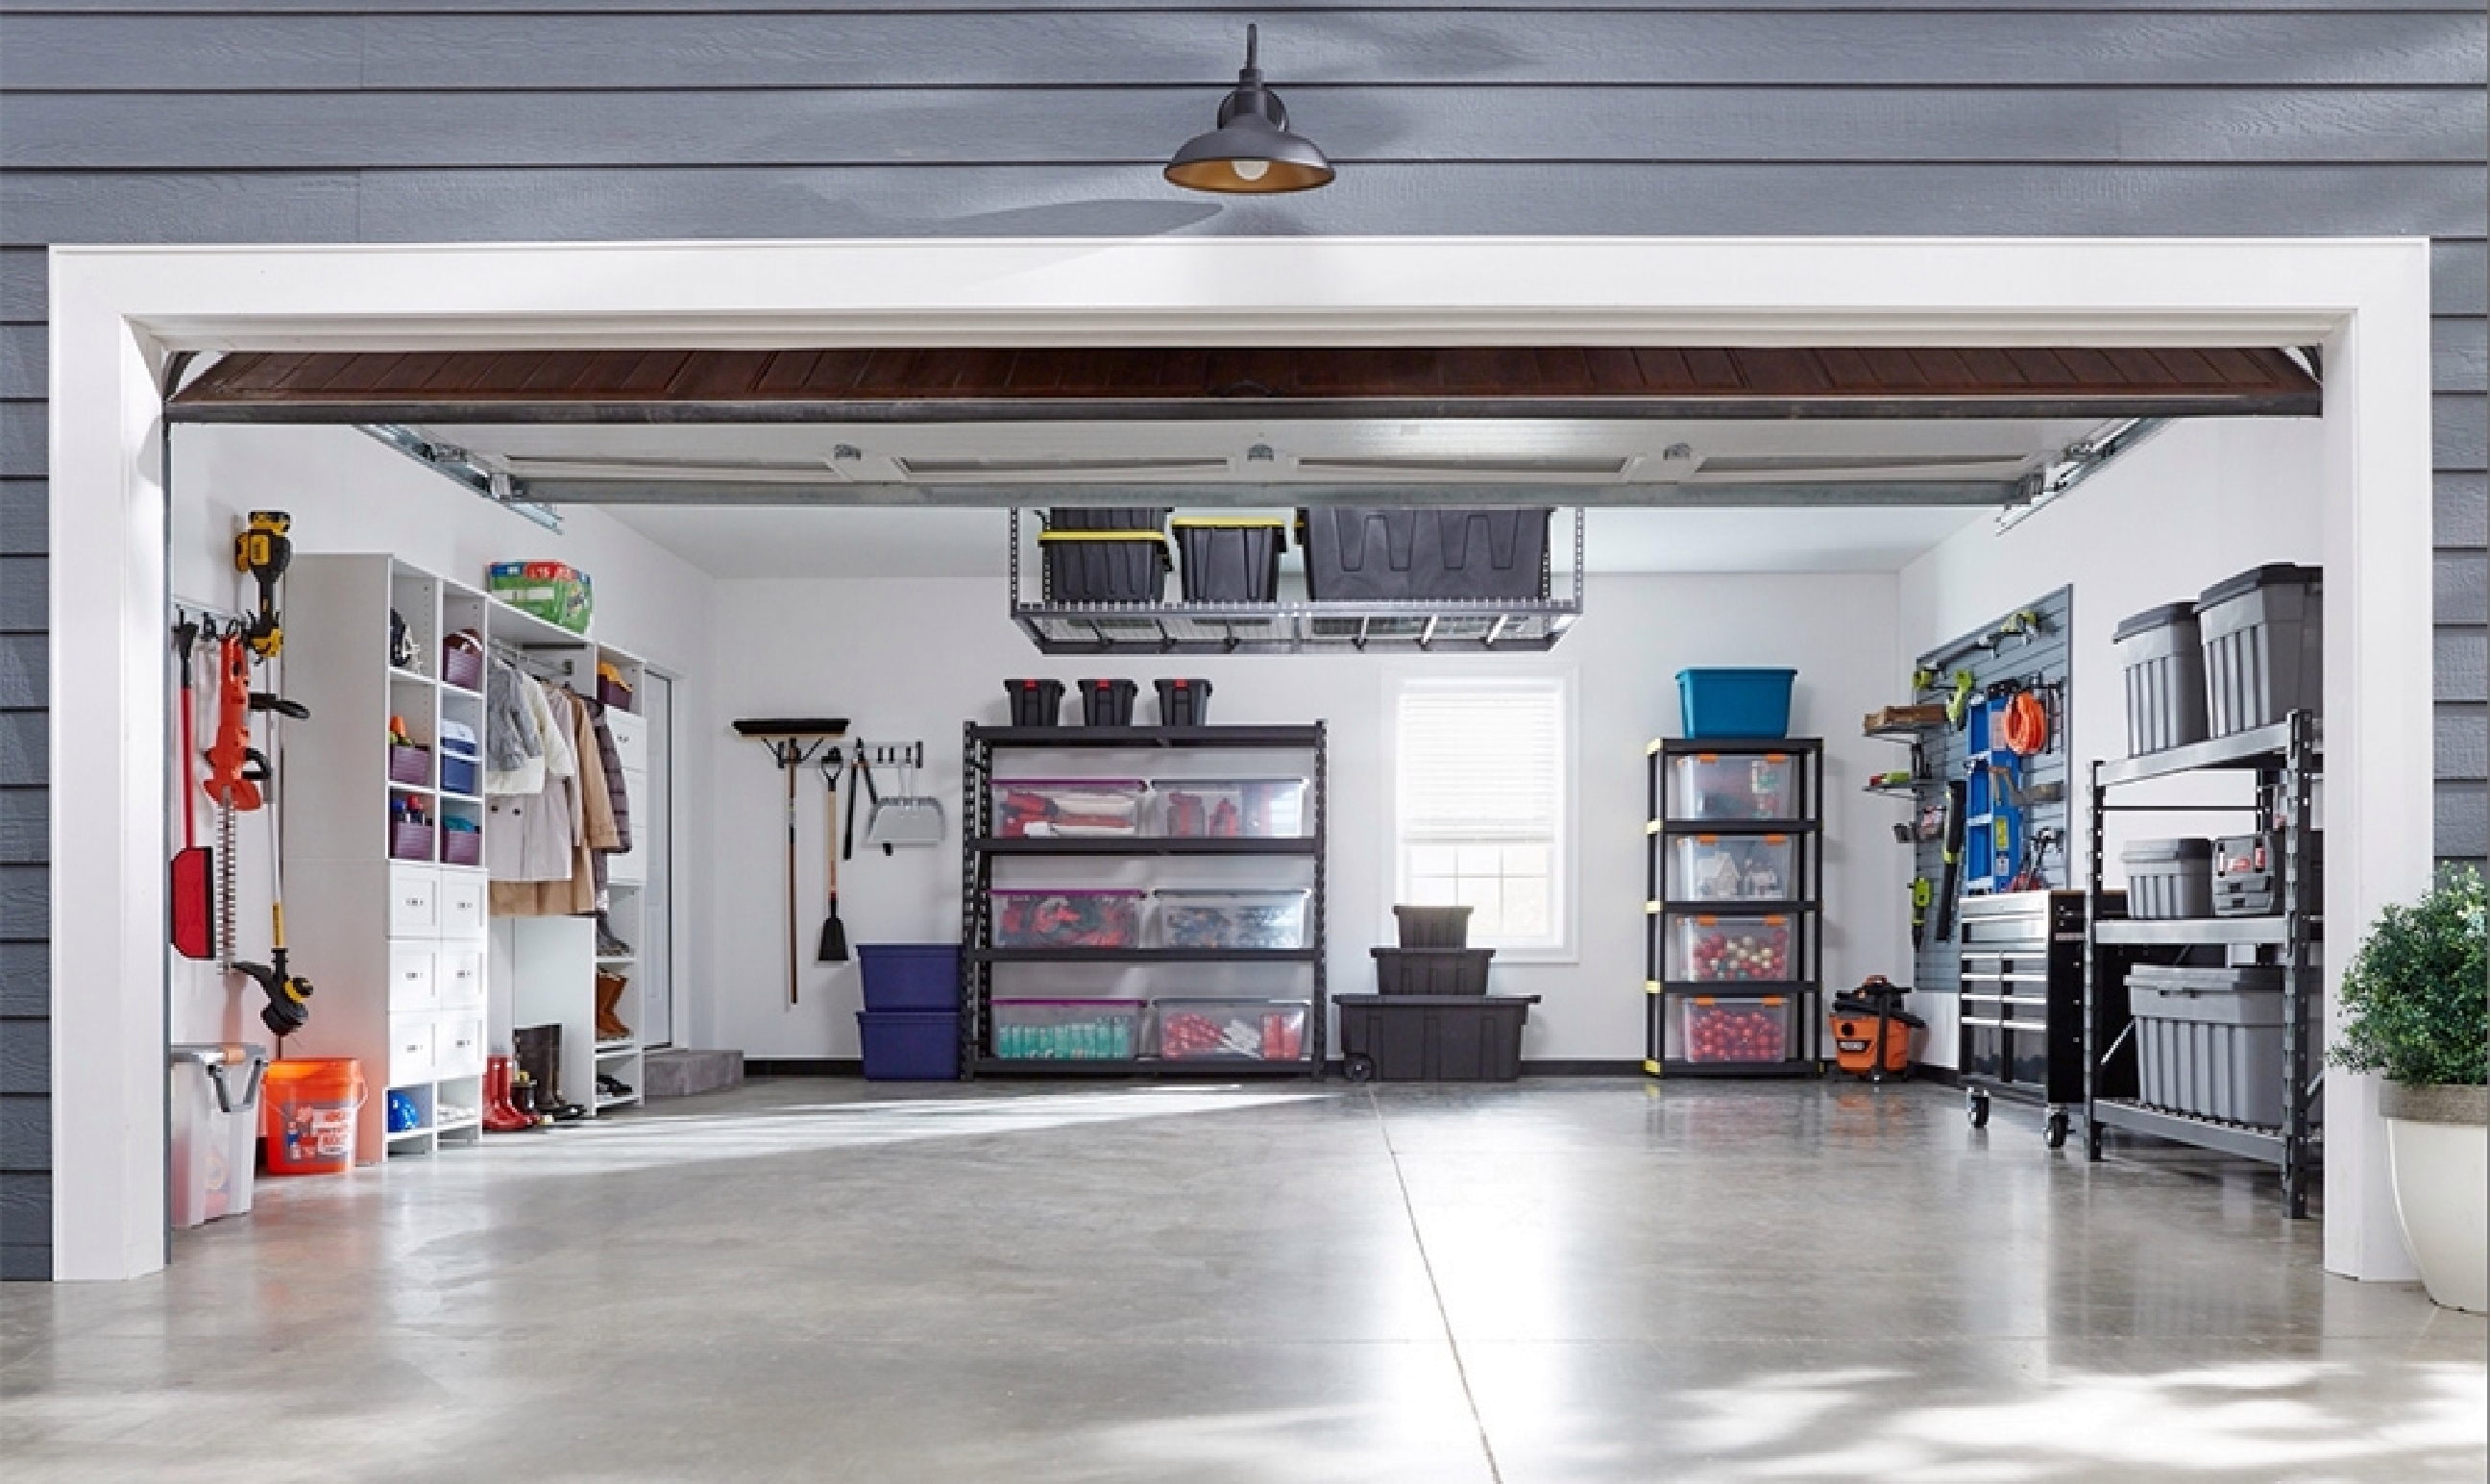 Сток гараж. Красивый гараж. Красивый интерьер гаража. Современный гараж внутри. Красивый гараж внутри.